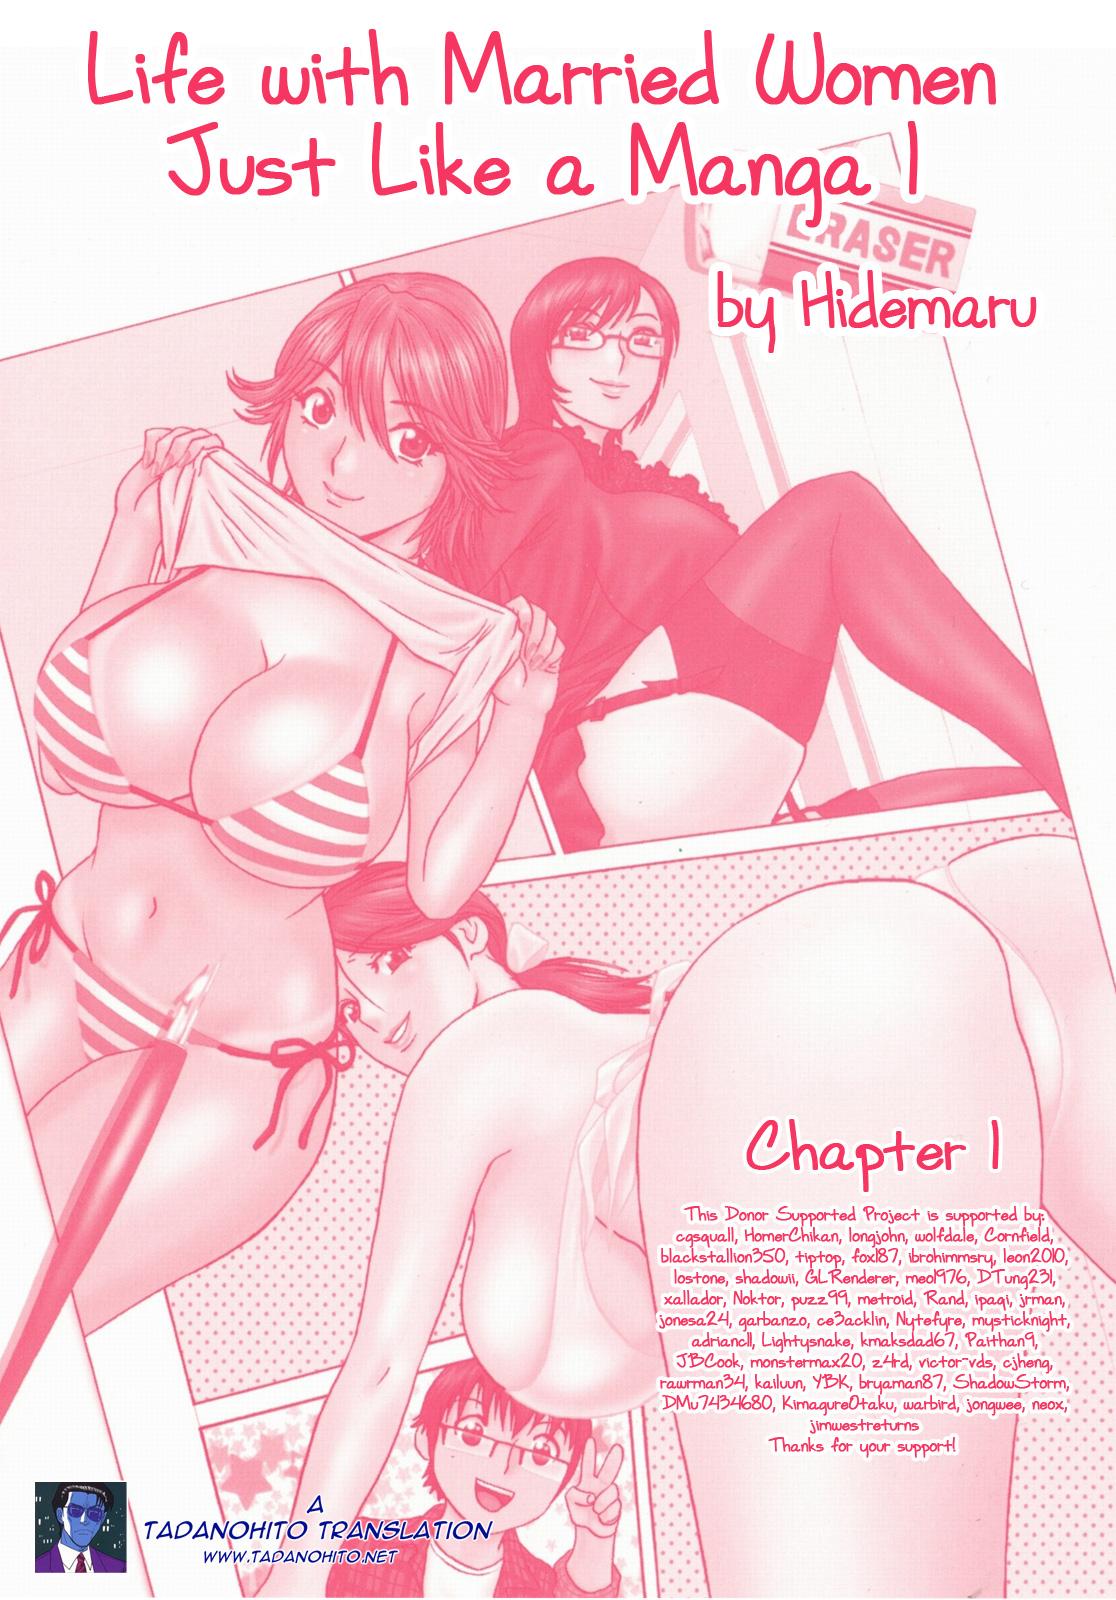 [Hidemaru] Life with Married Women Just Like a Manga 1 - Ch. 1-9 [English] {Tadanohito} 26